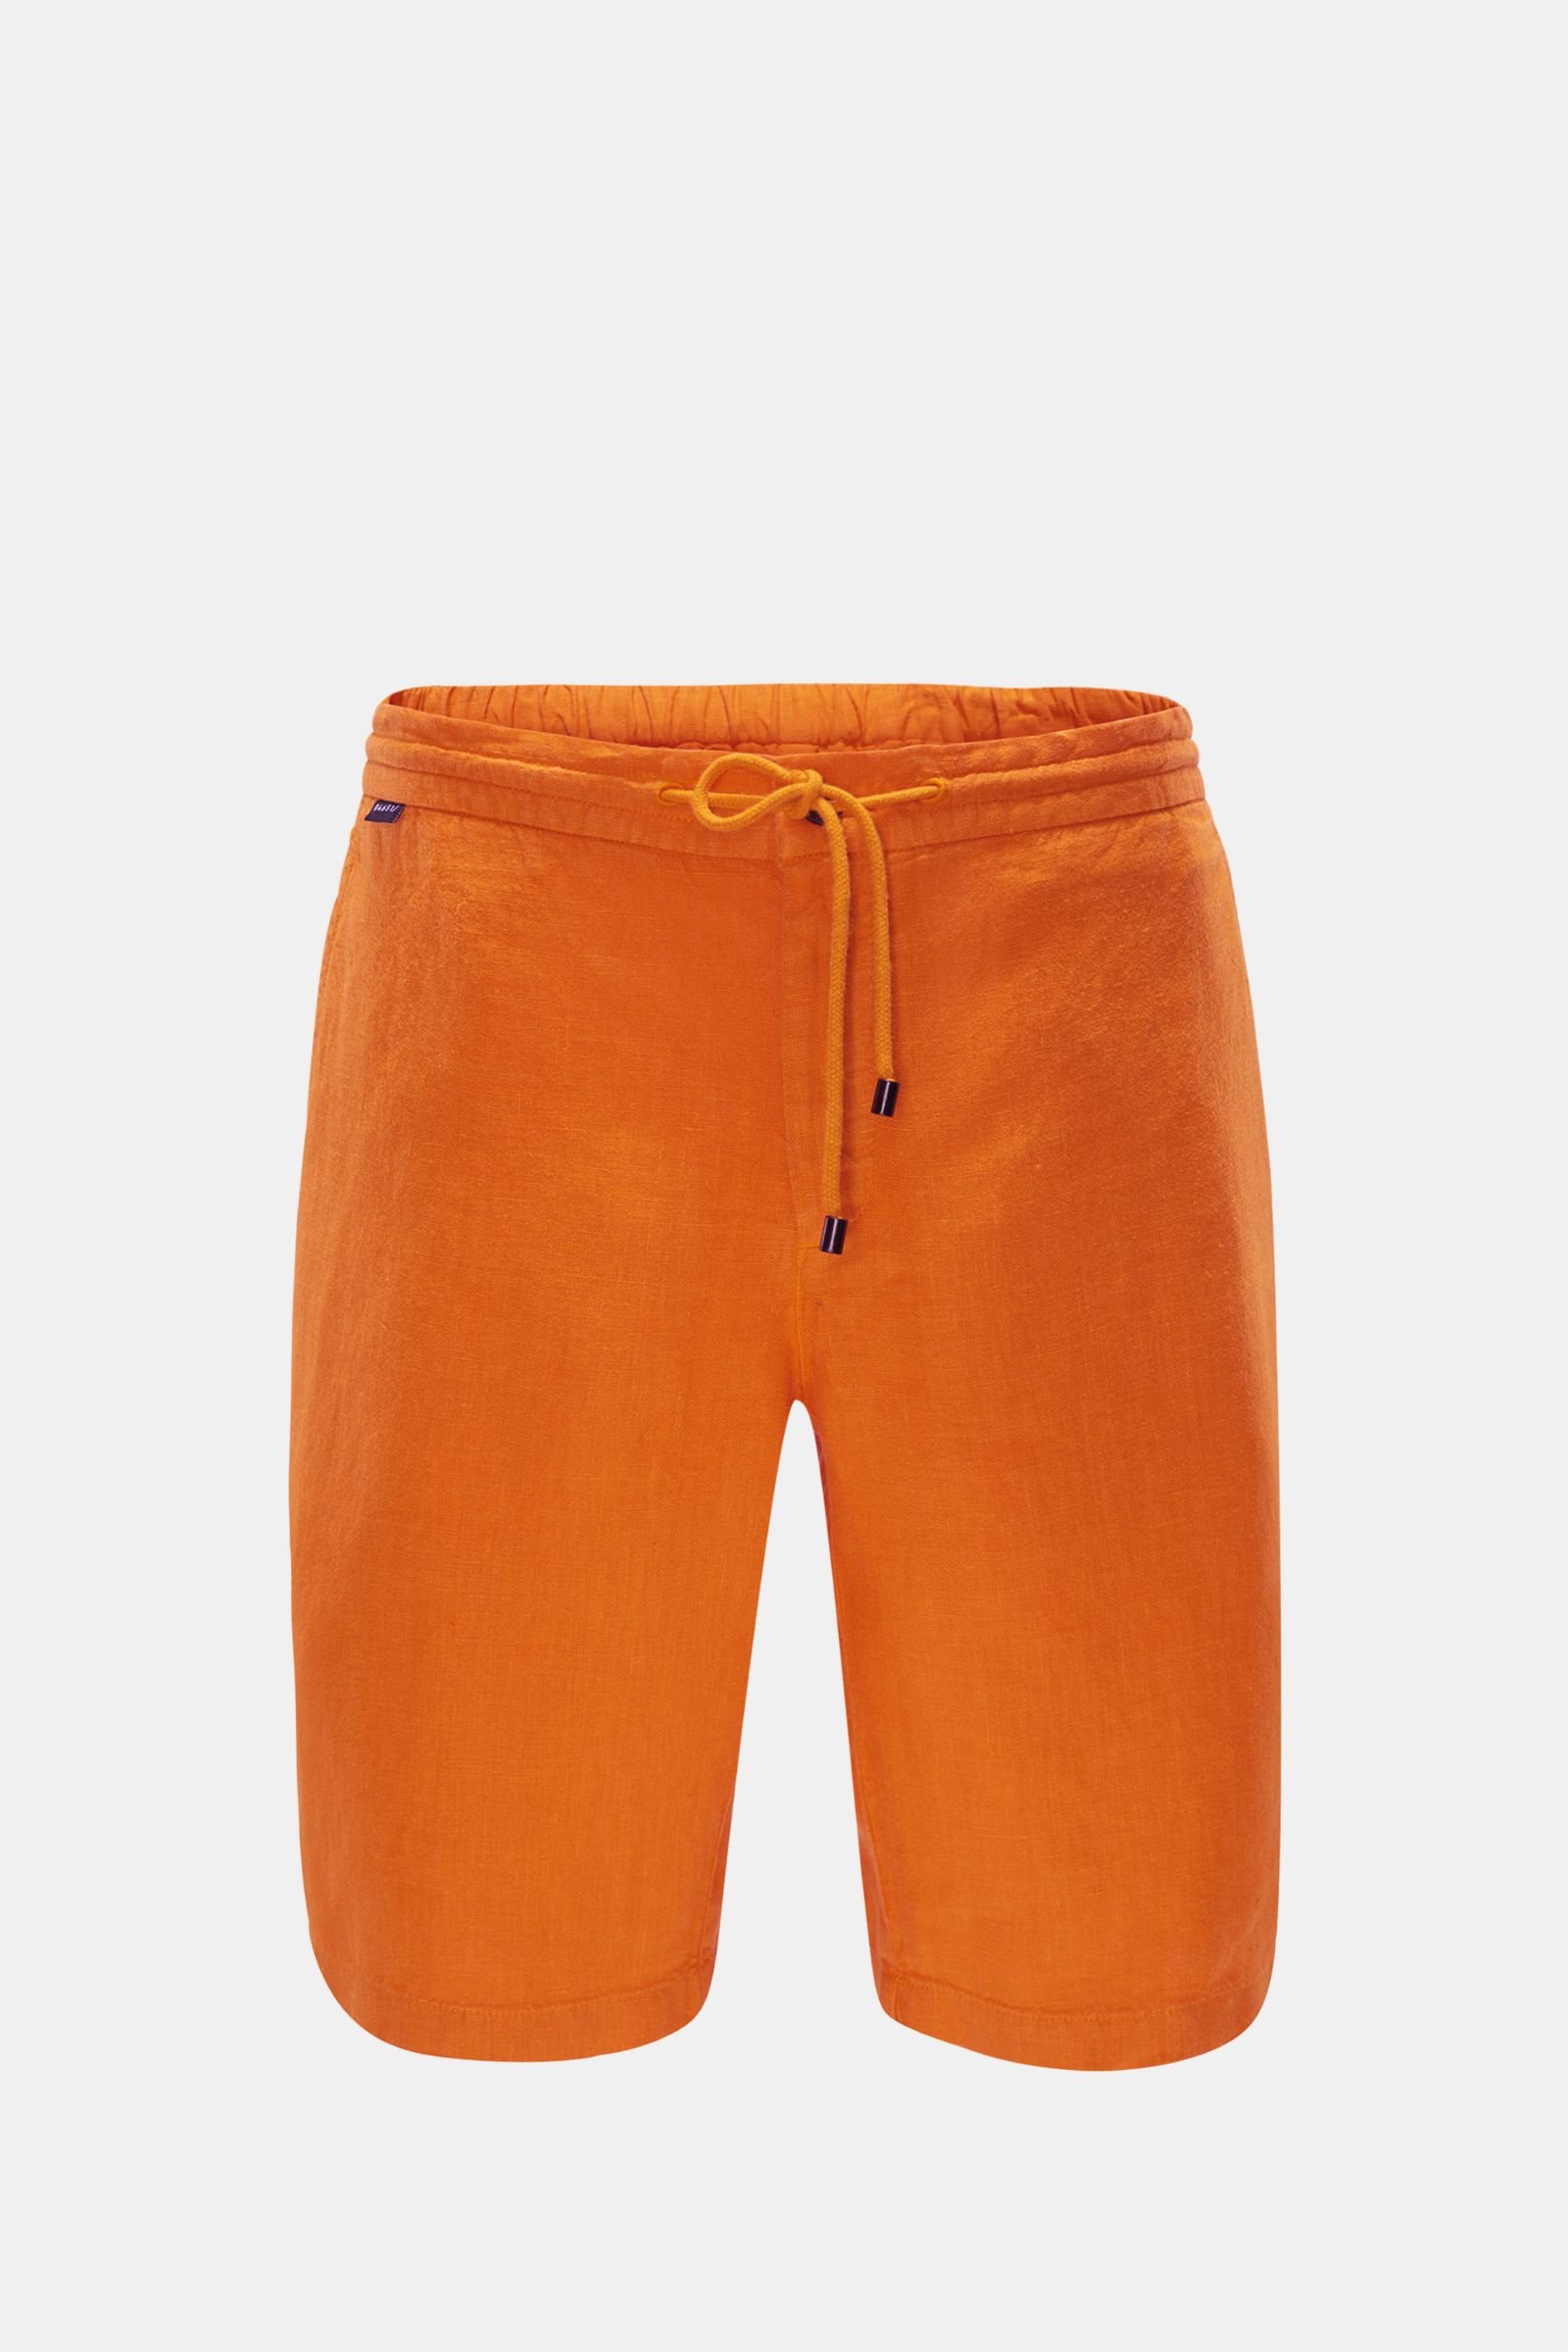 Linen Bermuda shorts orange